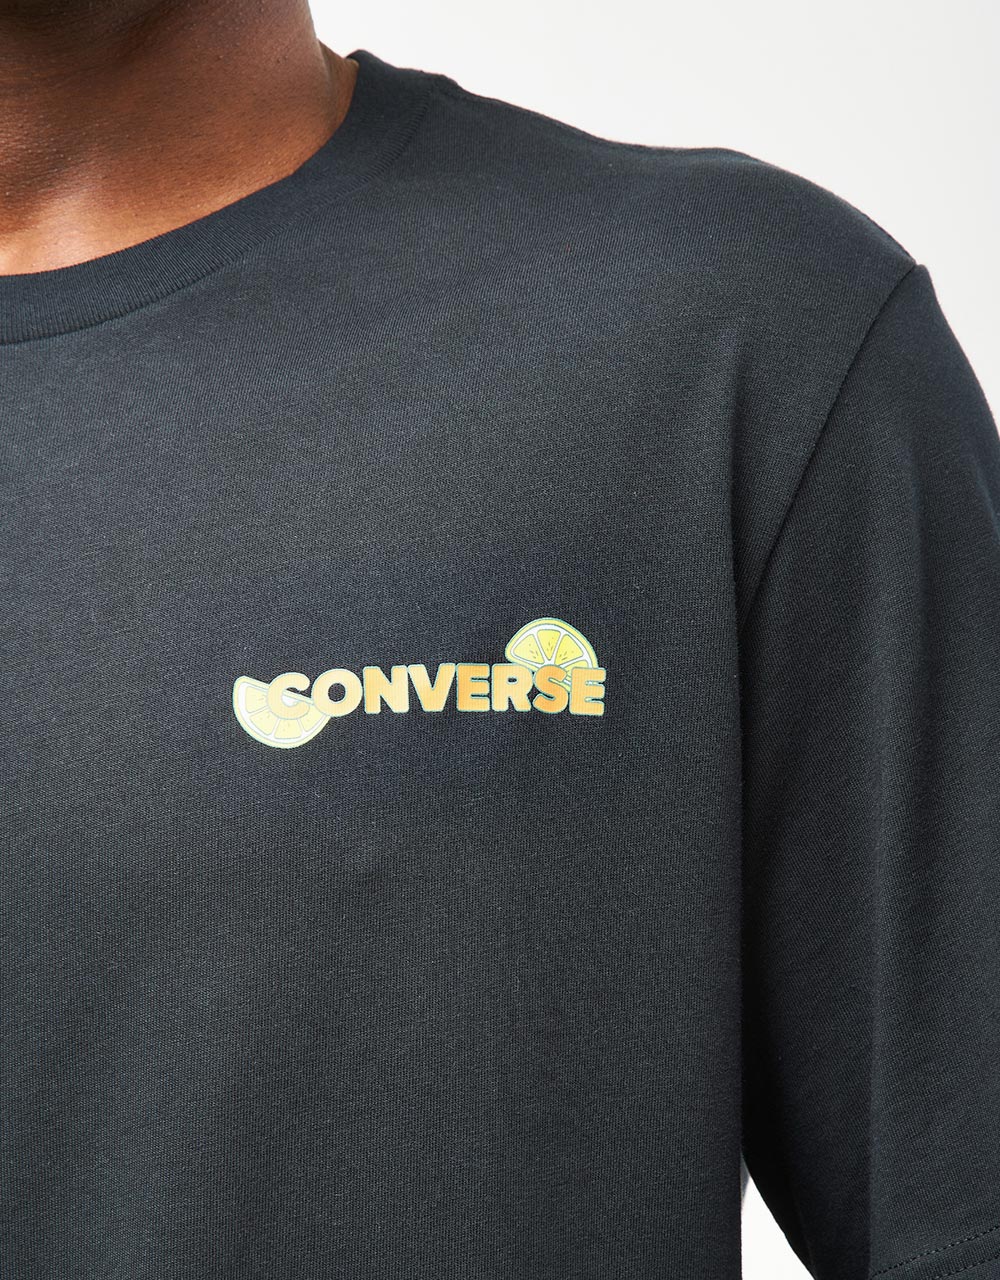 Converse Cons How-To Lemonade T-Shirt - Converse Black